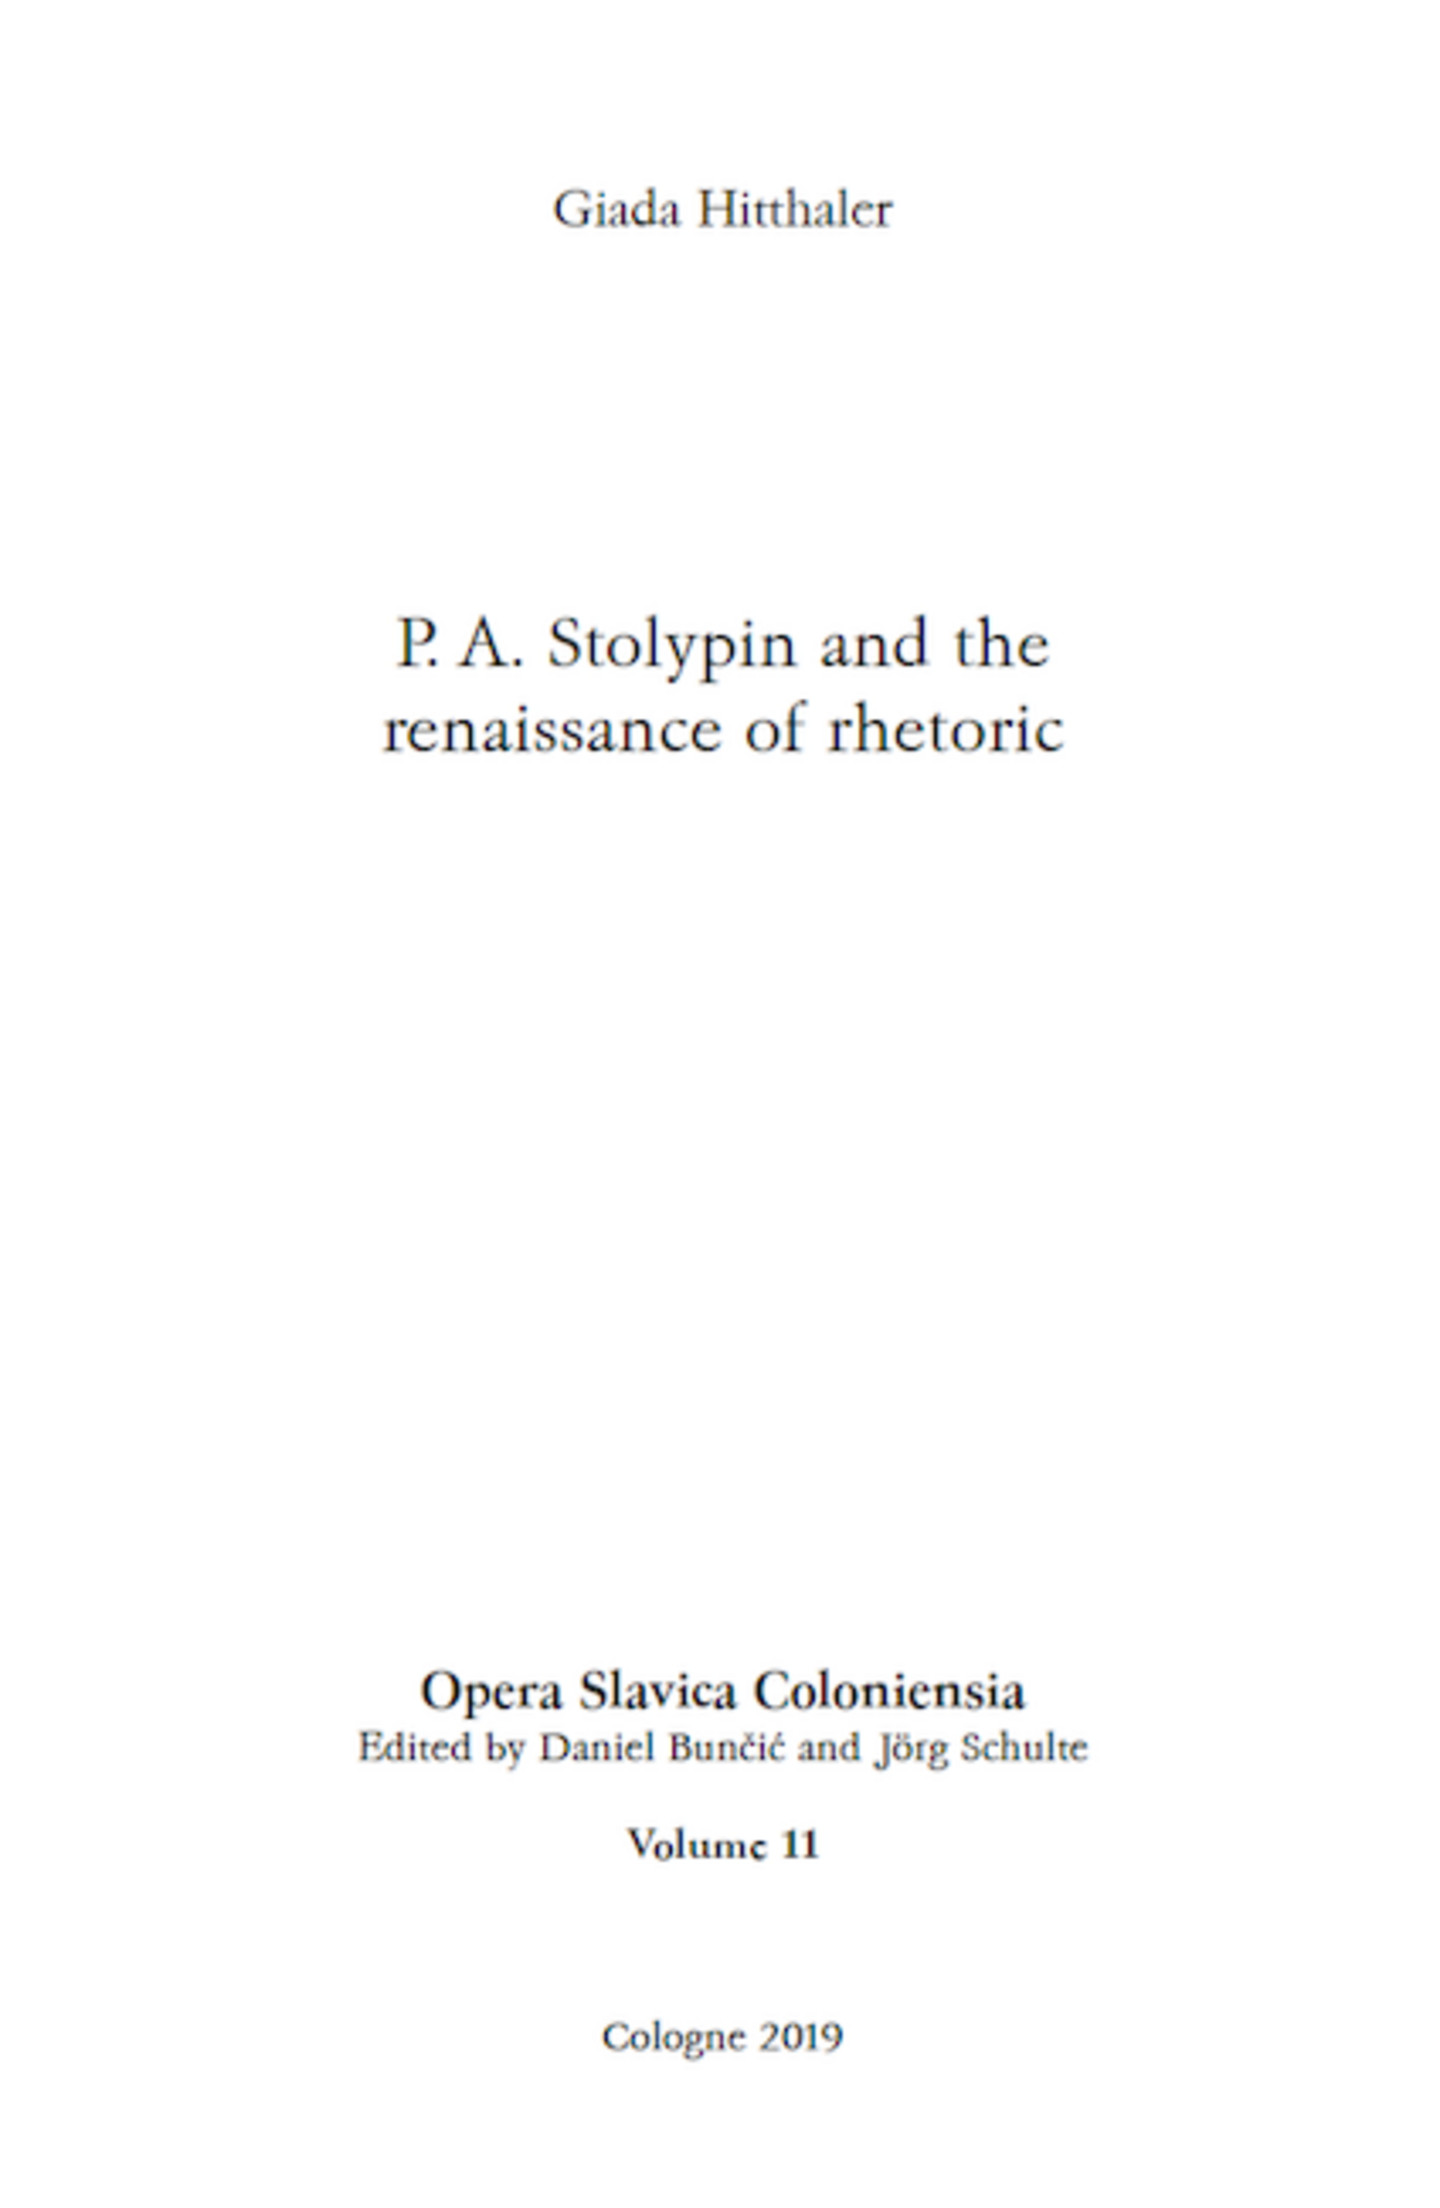 Giada Hitthaler (2019) P. A. Stolypin and the renaissance of rhetoric